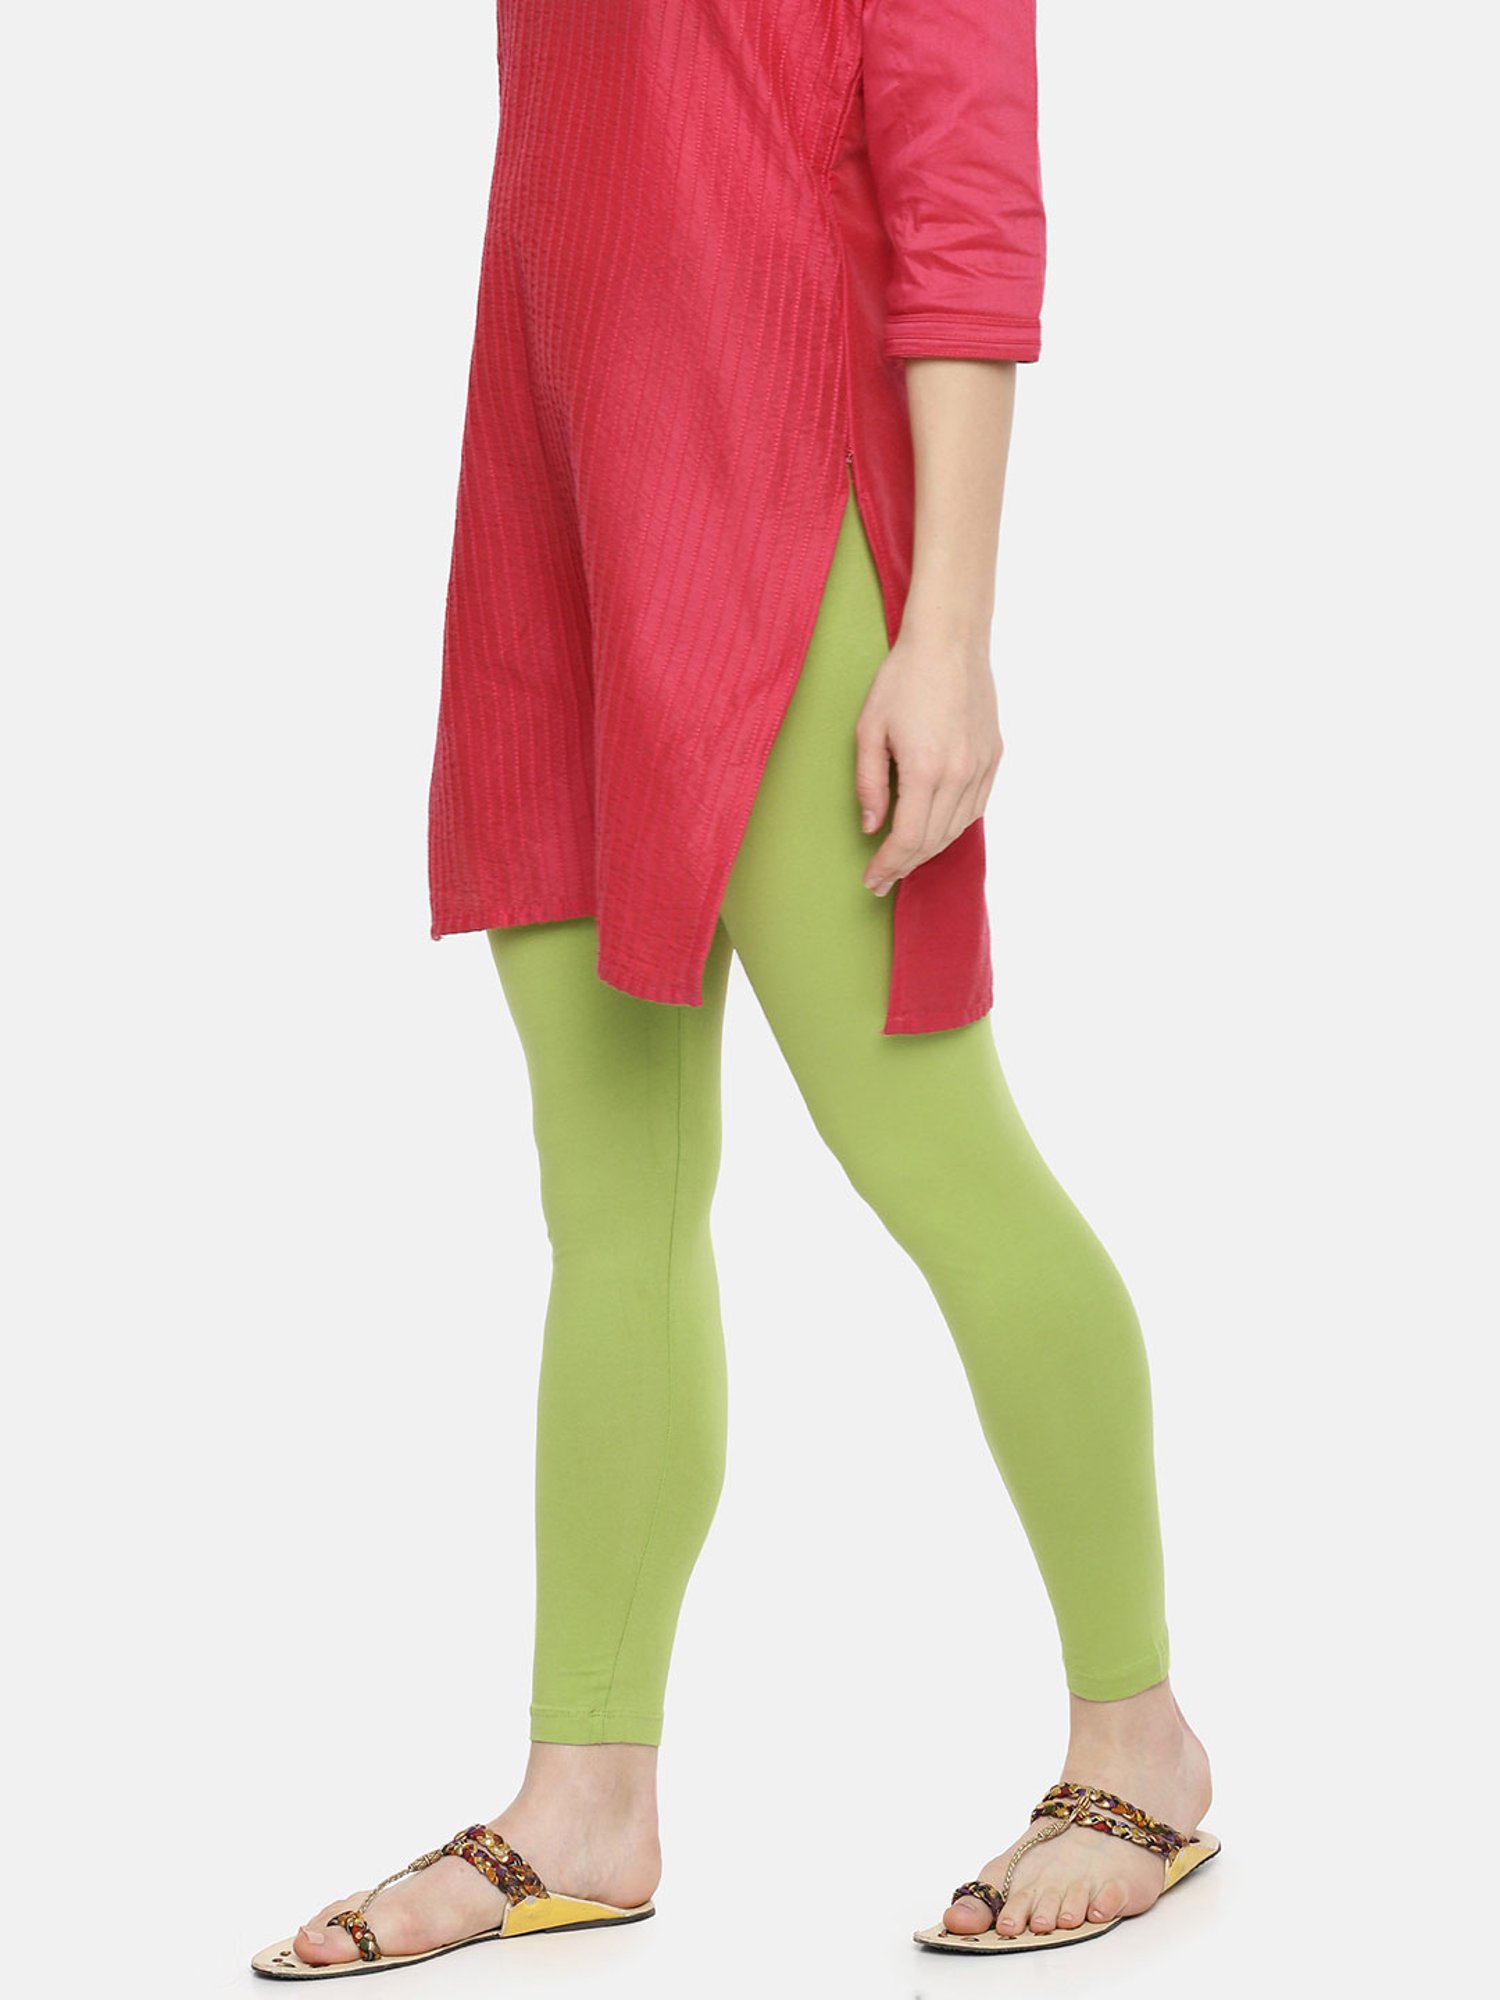 Dollar Women's Missy Pack of 1 Cotton Slim Fit Brick Color Ankle Length  Leggings